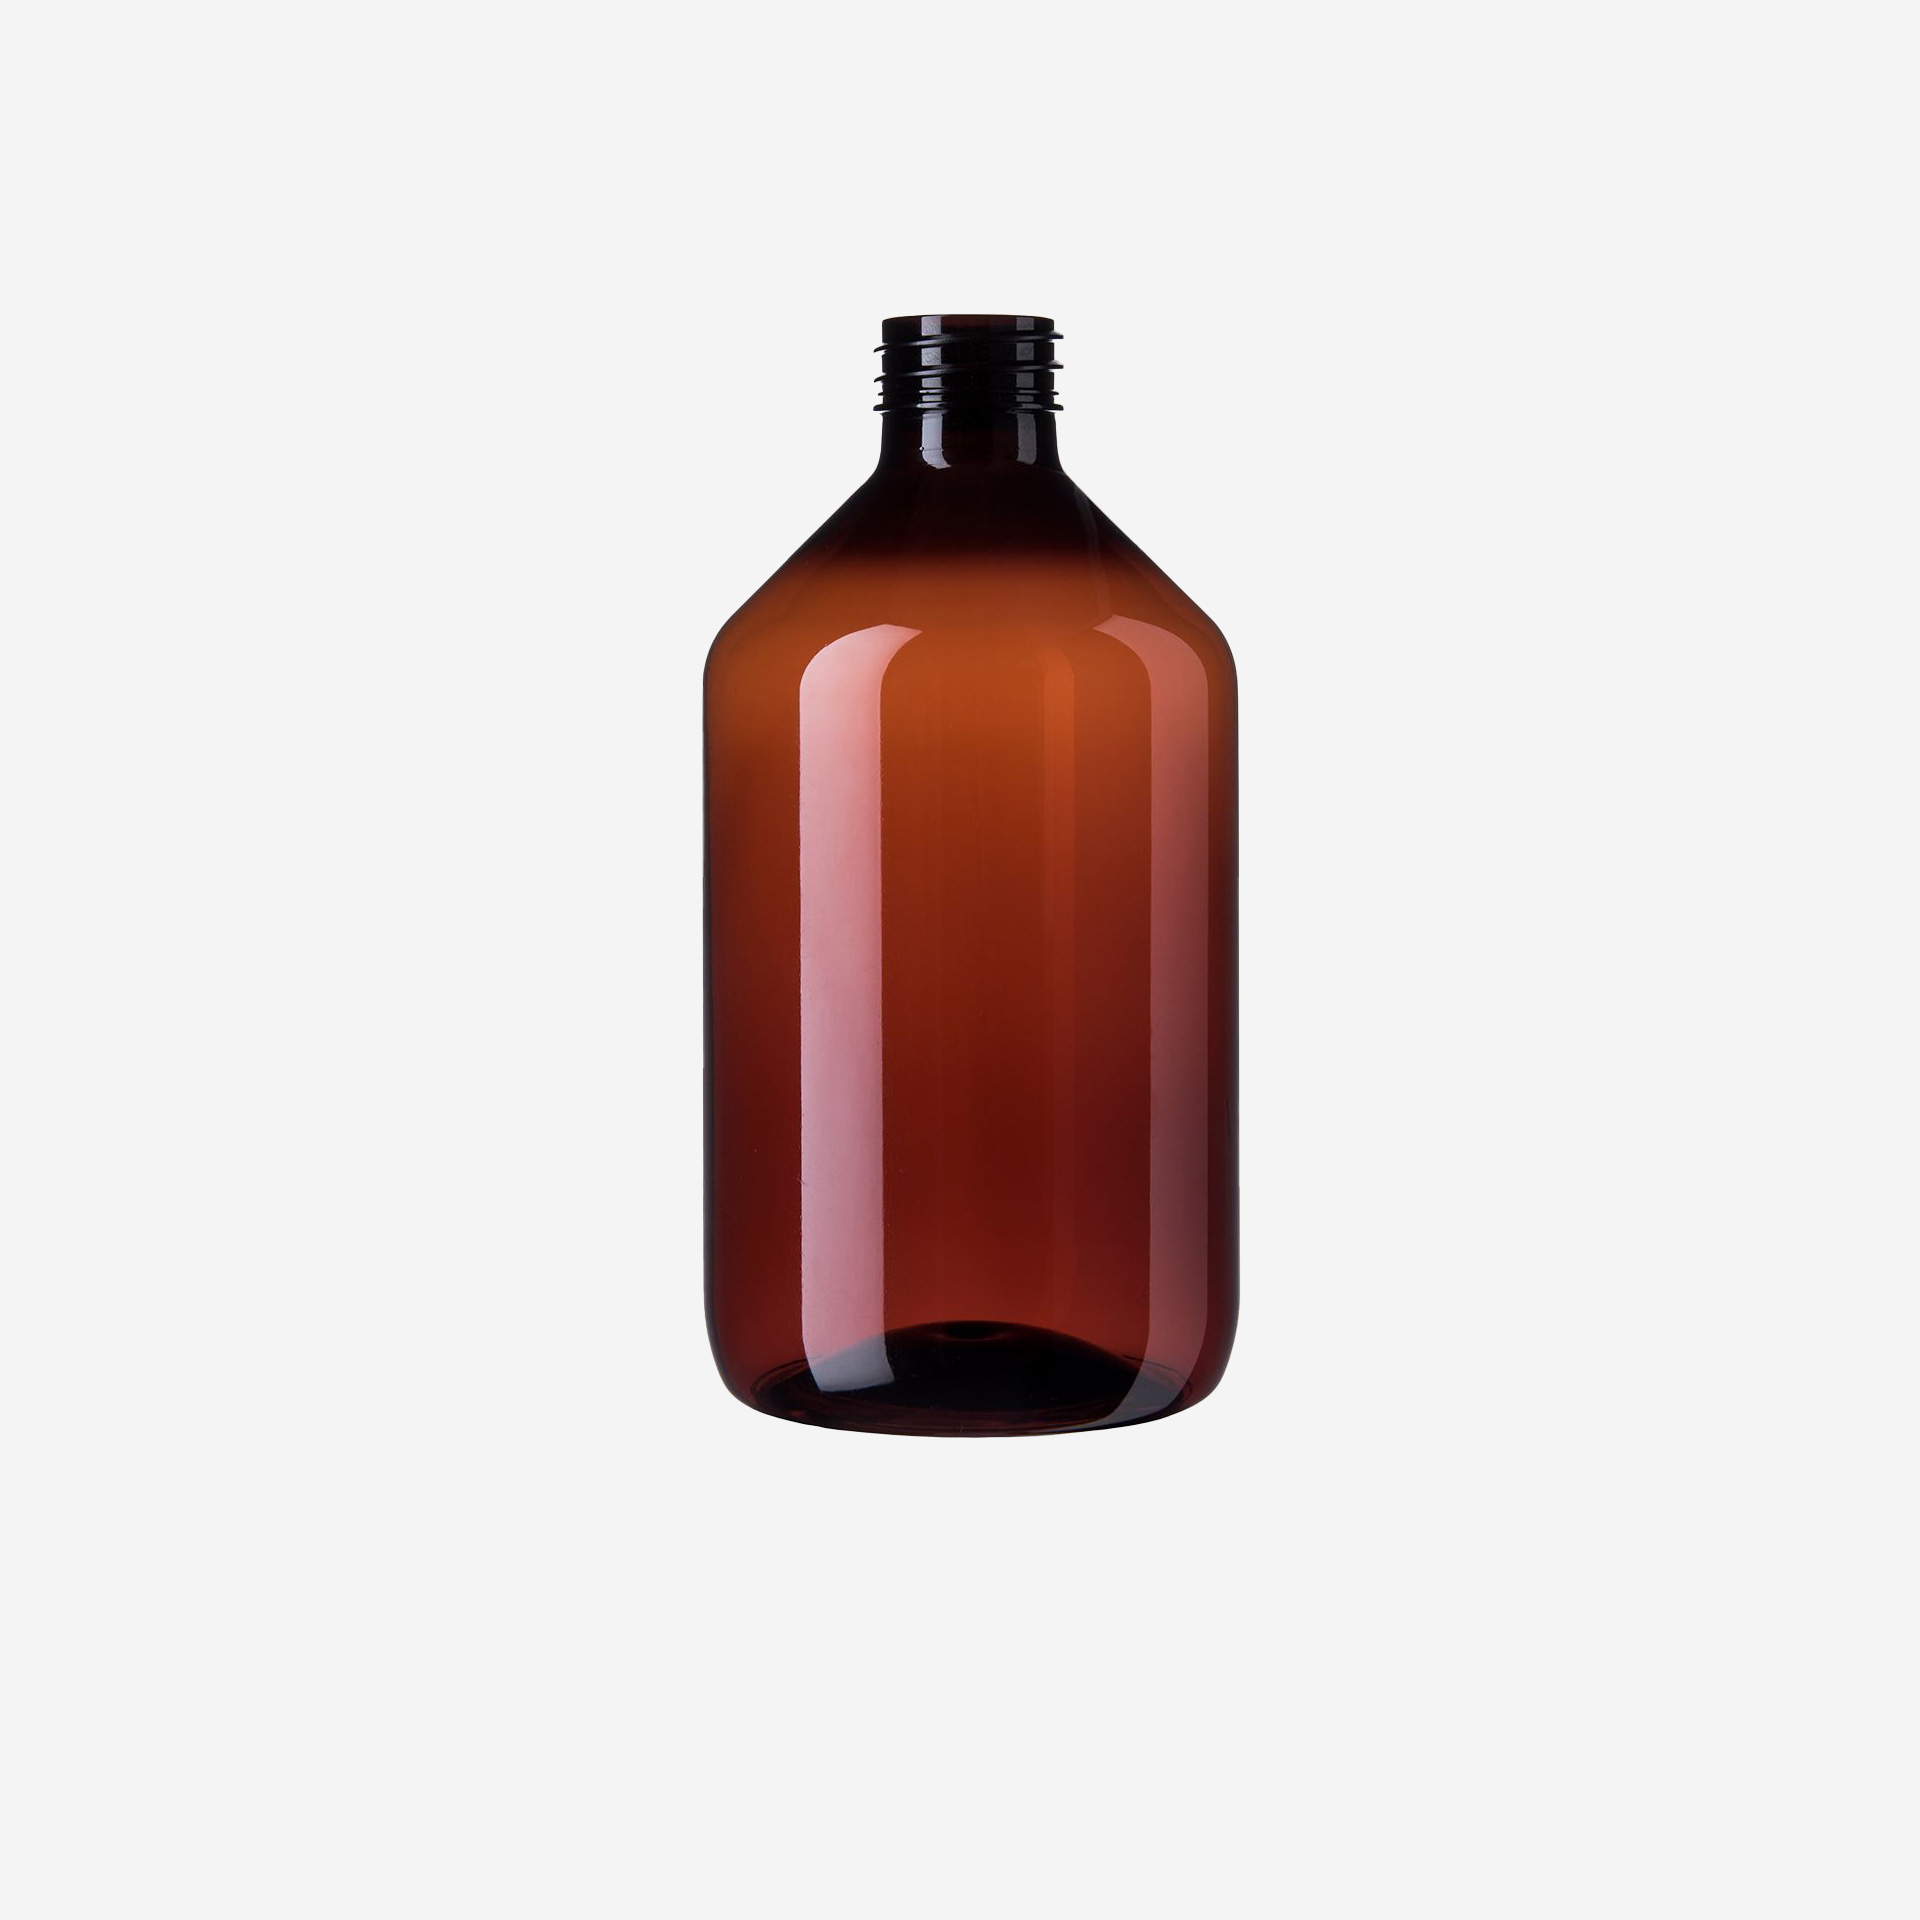 Apothekerflasche braun Recycling 300 ml Veralflasche